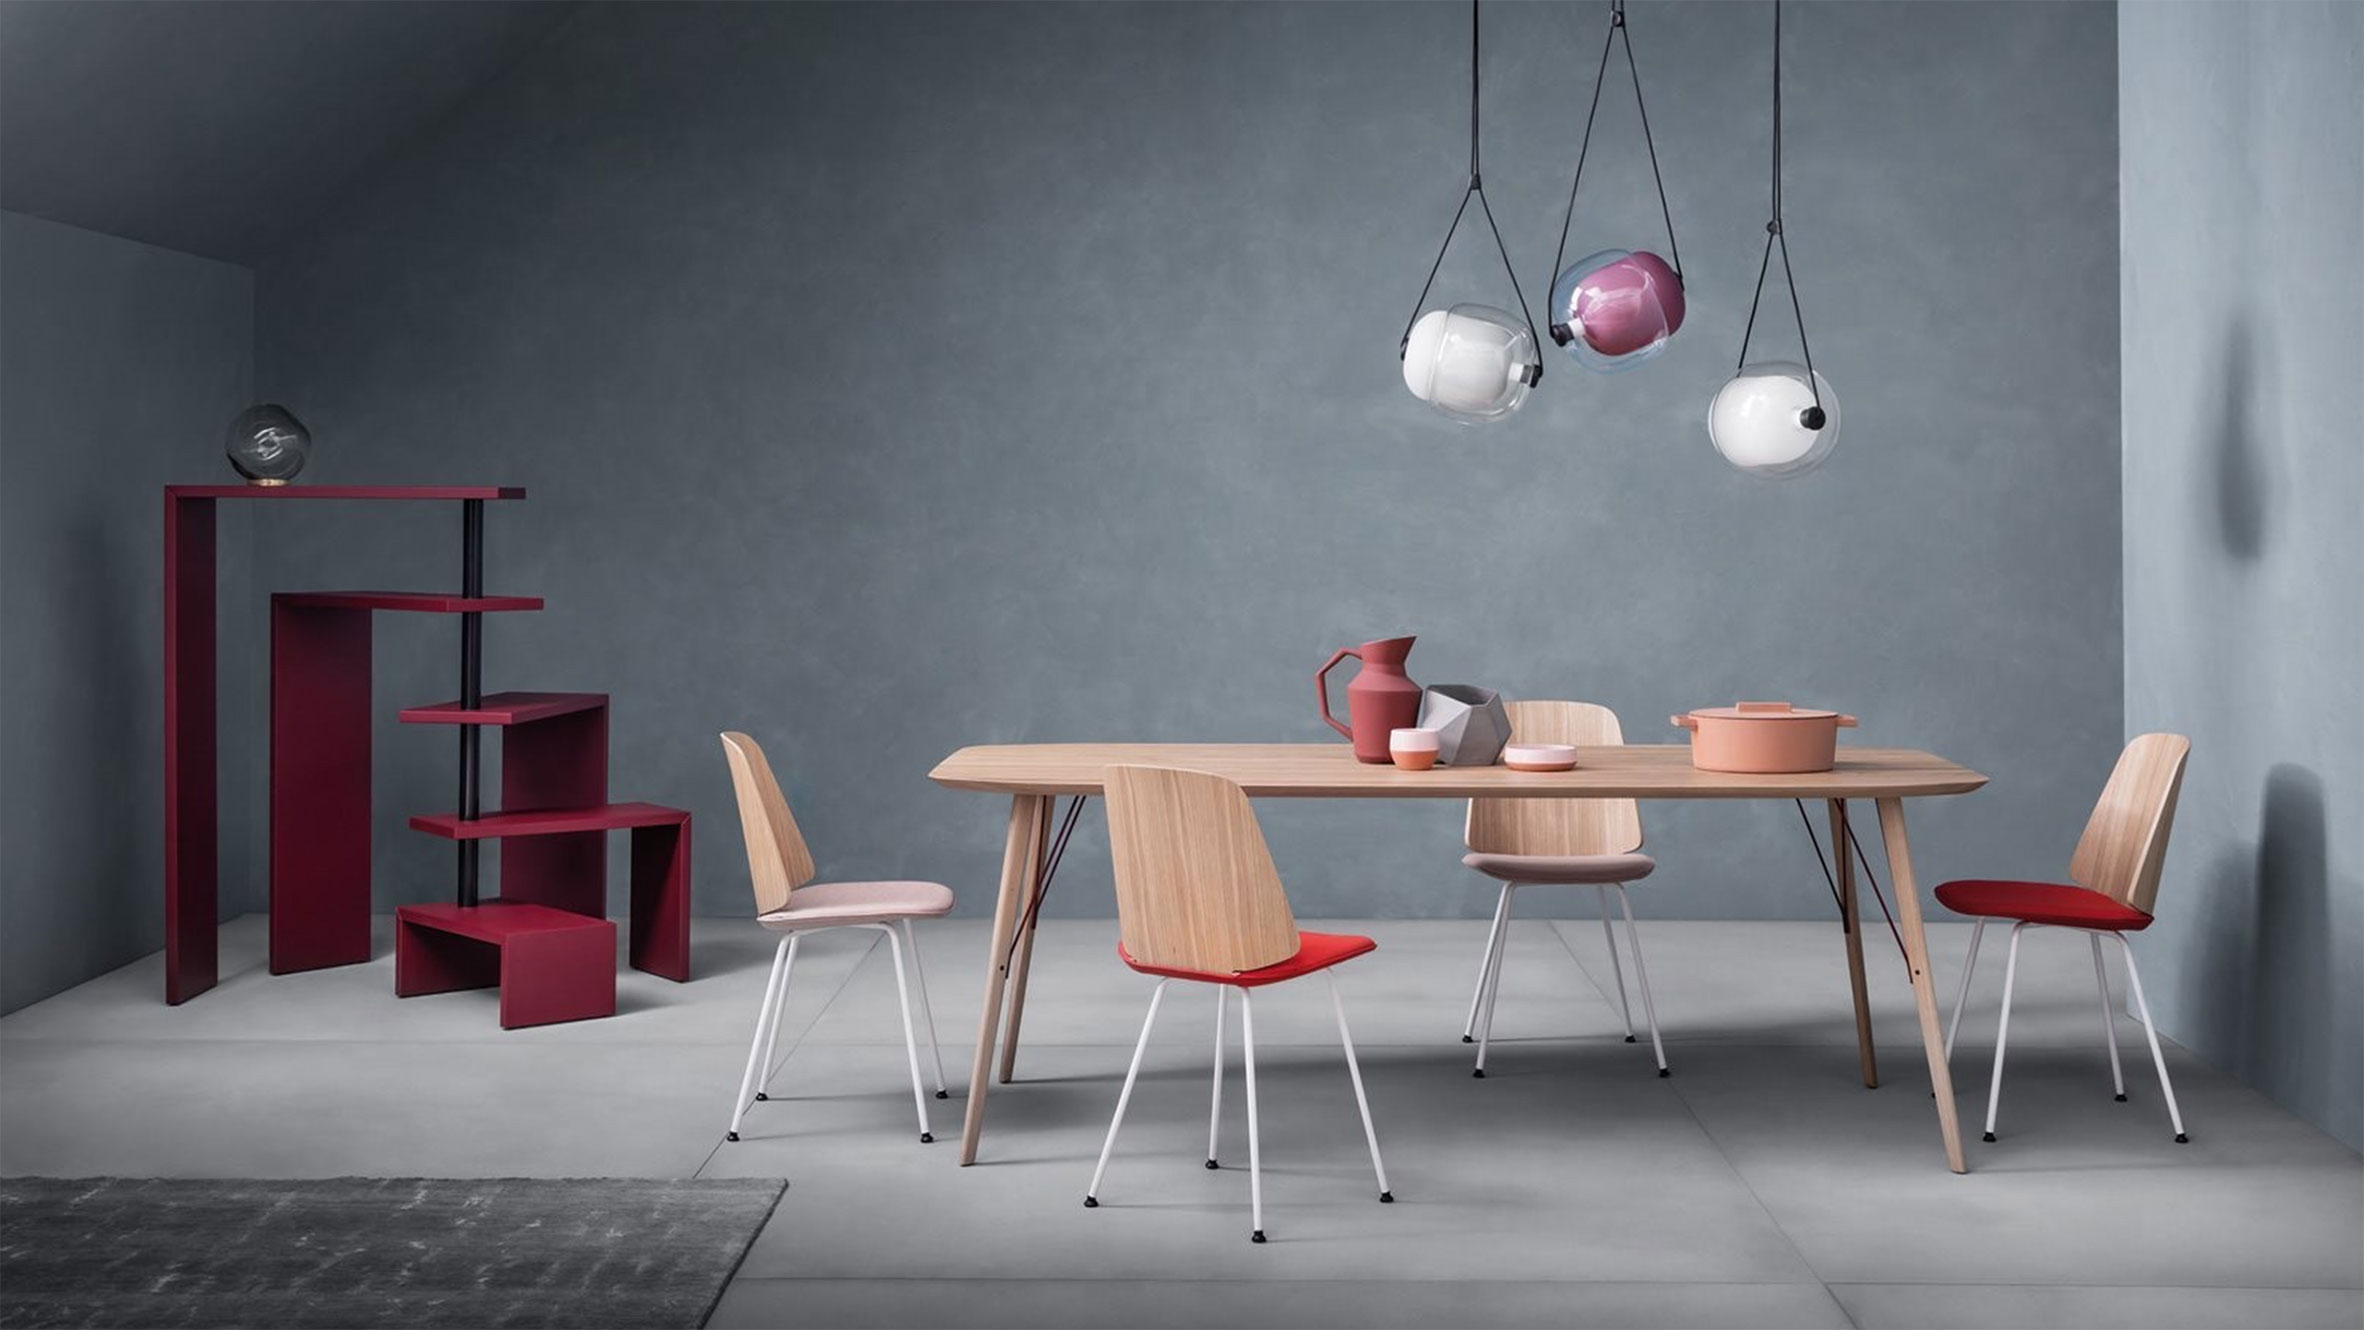 Zanotta furniture will be exhibited at Design Shanghai